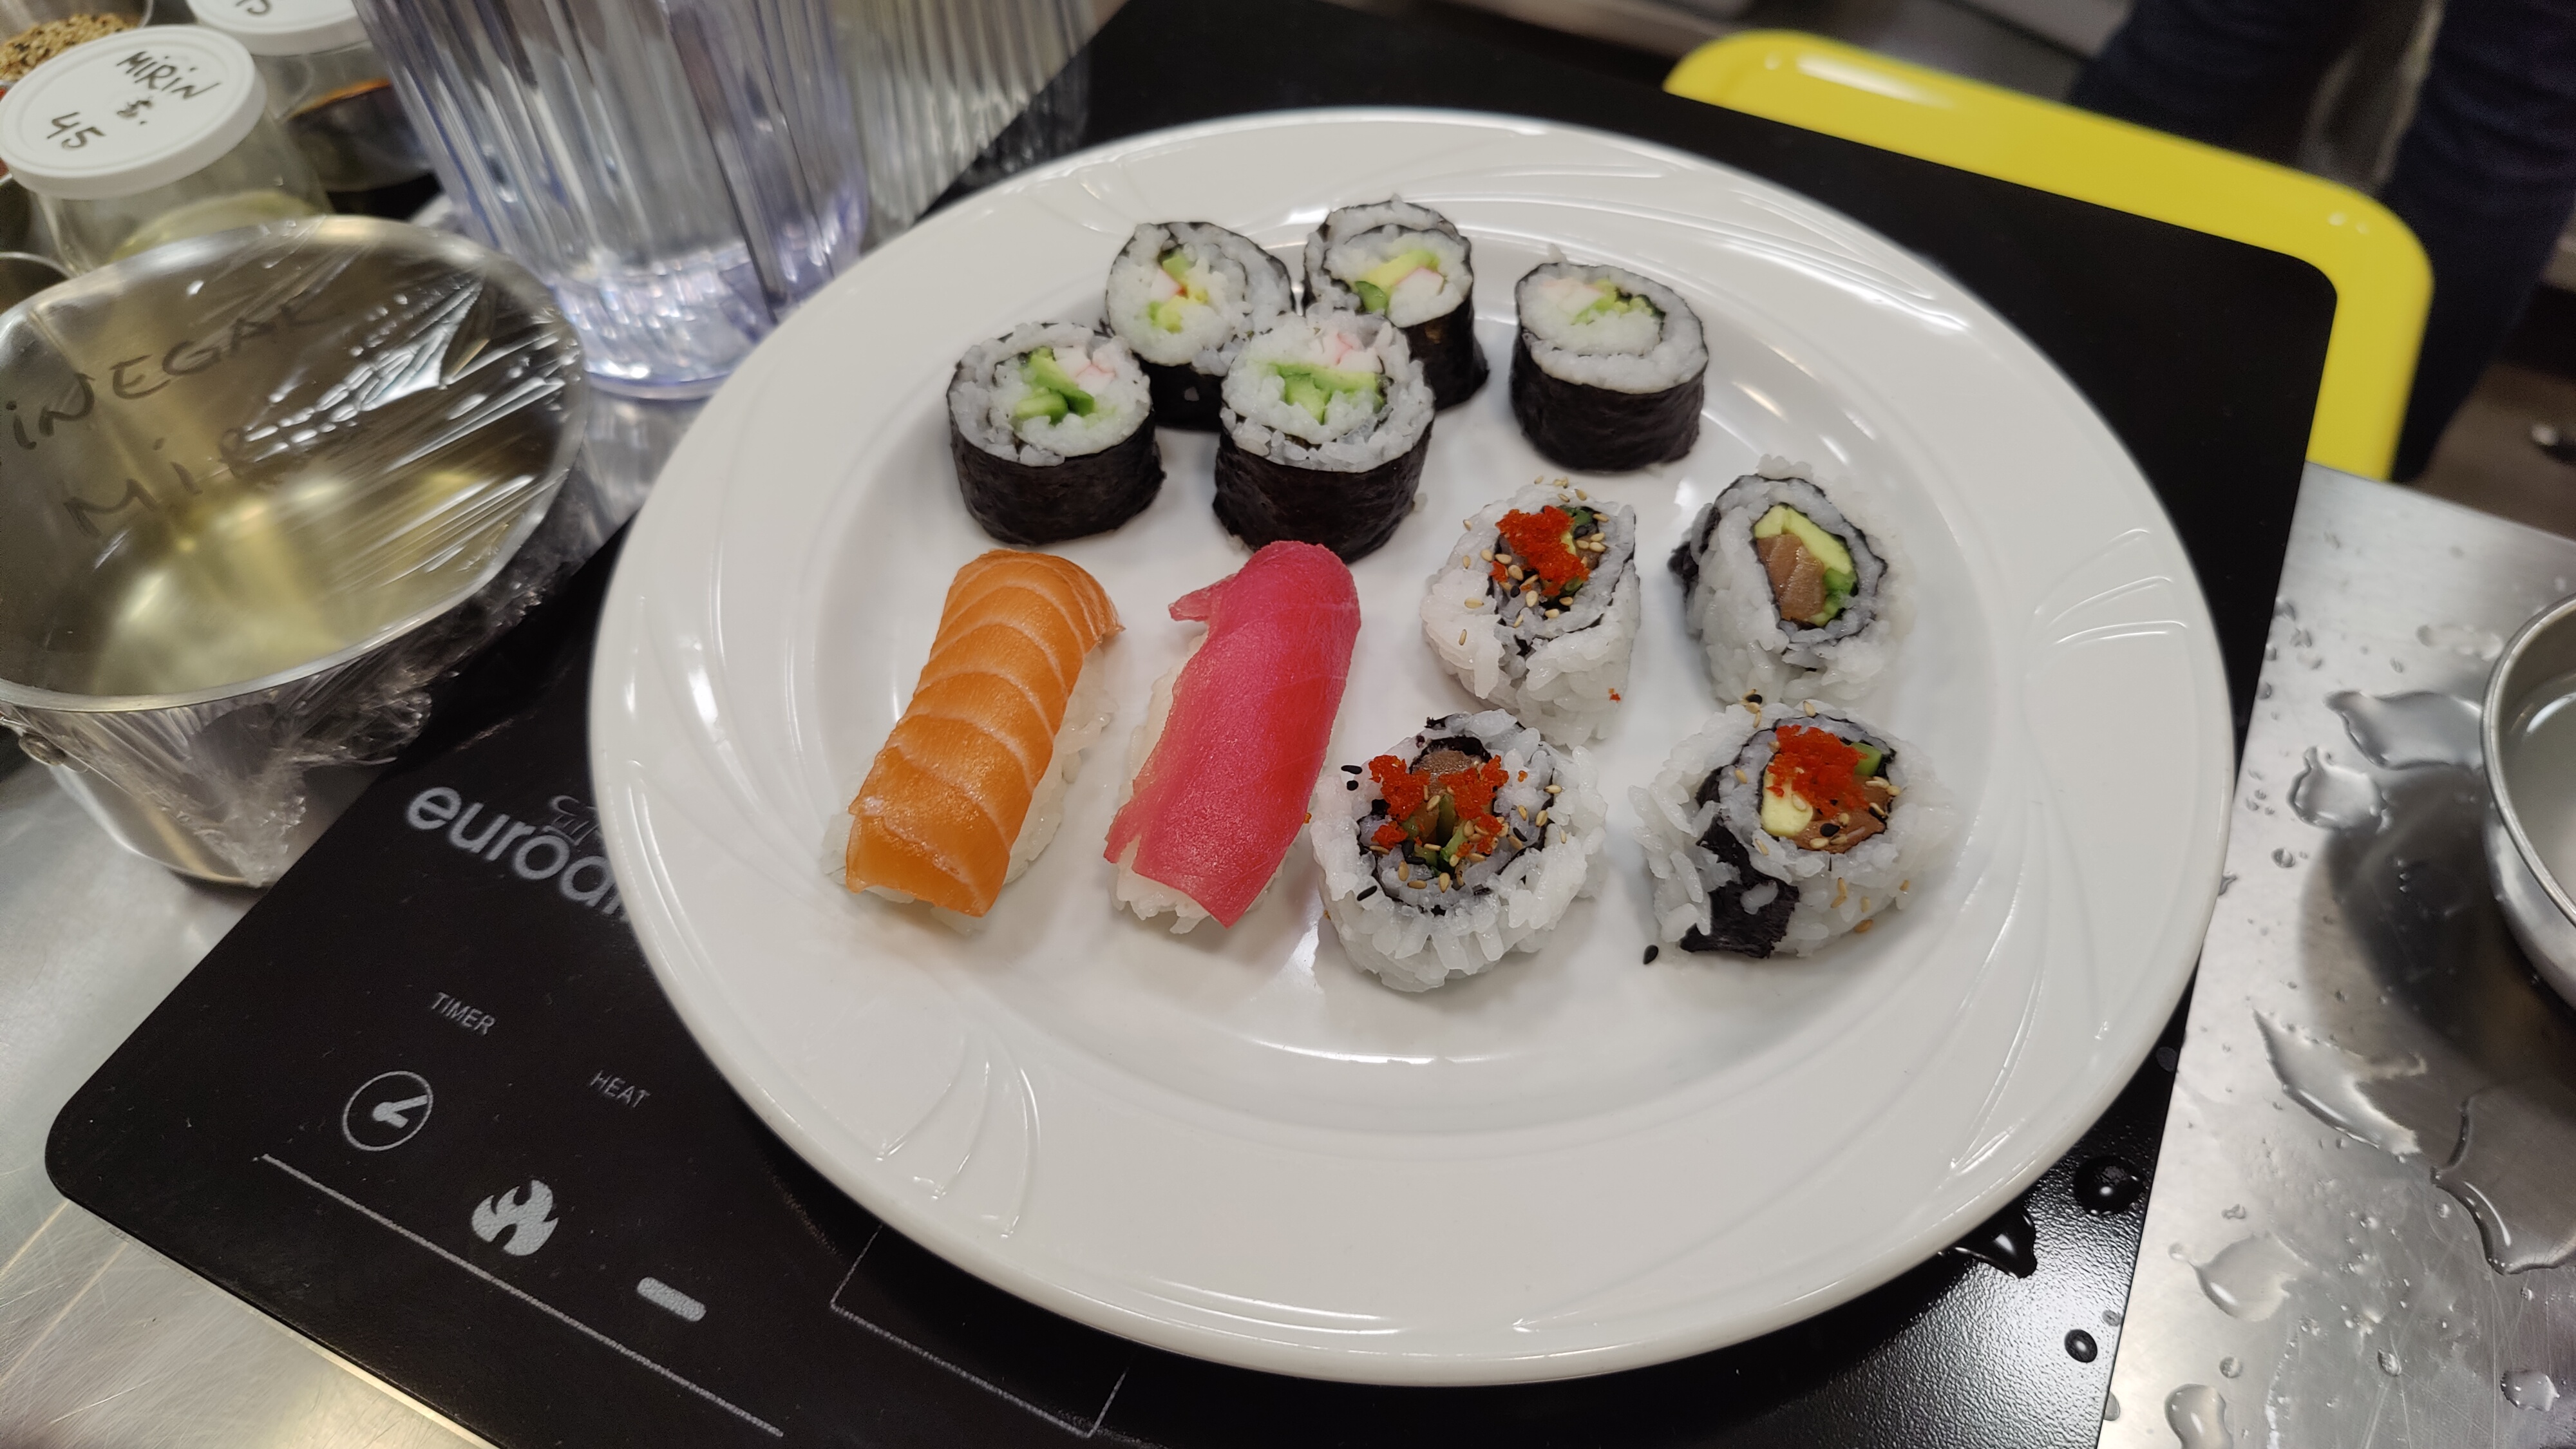 Crab maki, reverse-wrapped salmon maki, and salmon and tuna nigiri sushi sit on a plate.